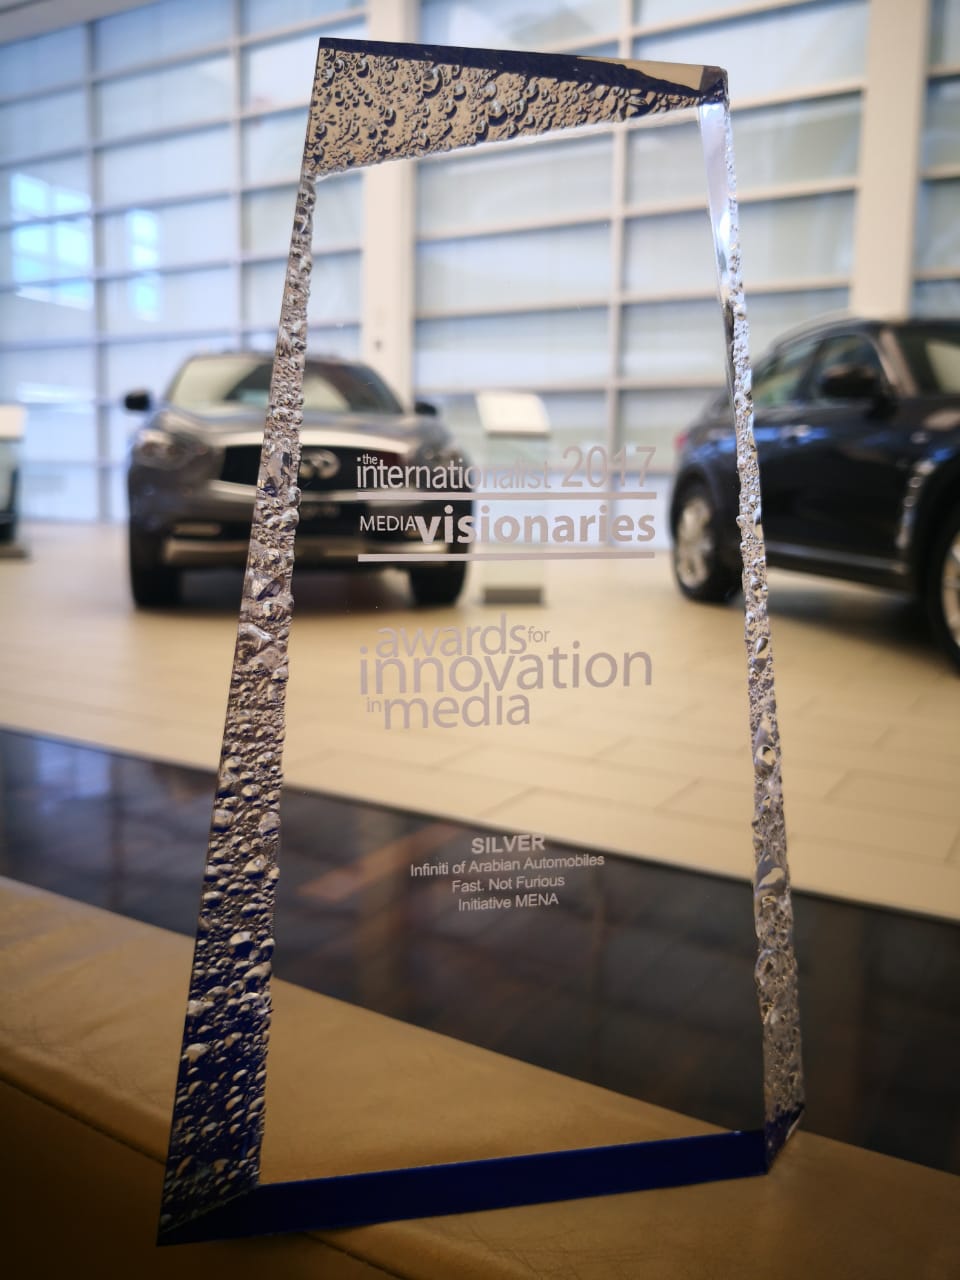 INFINITI of Arabian Automobiles Wins Silver Award at 10th Annual Internationalist Awards for Innovation in Media